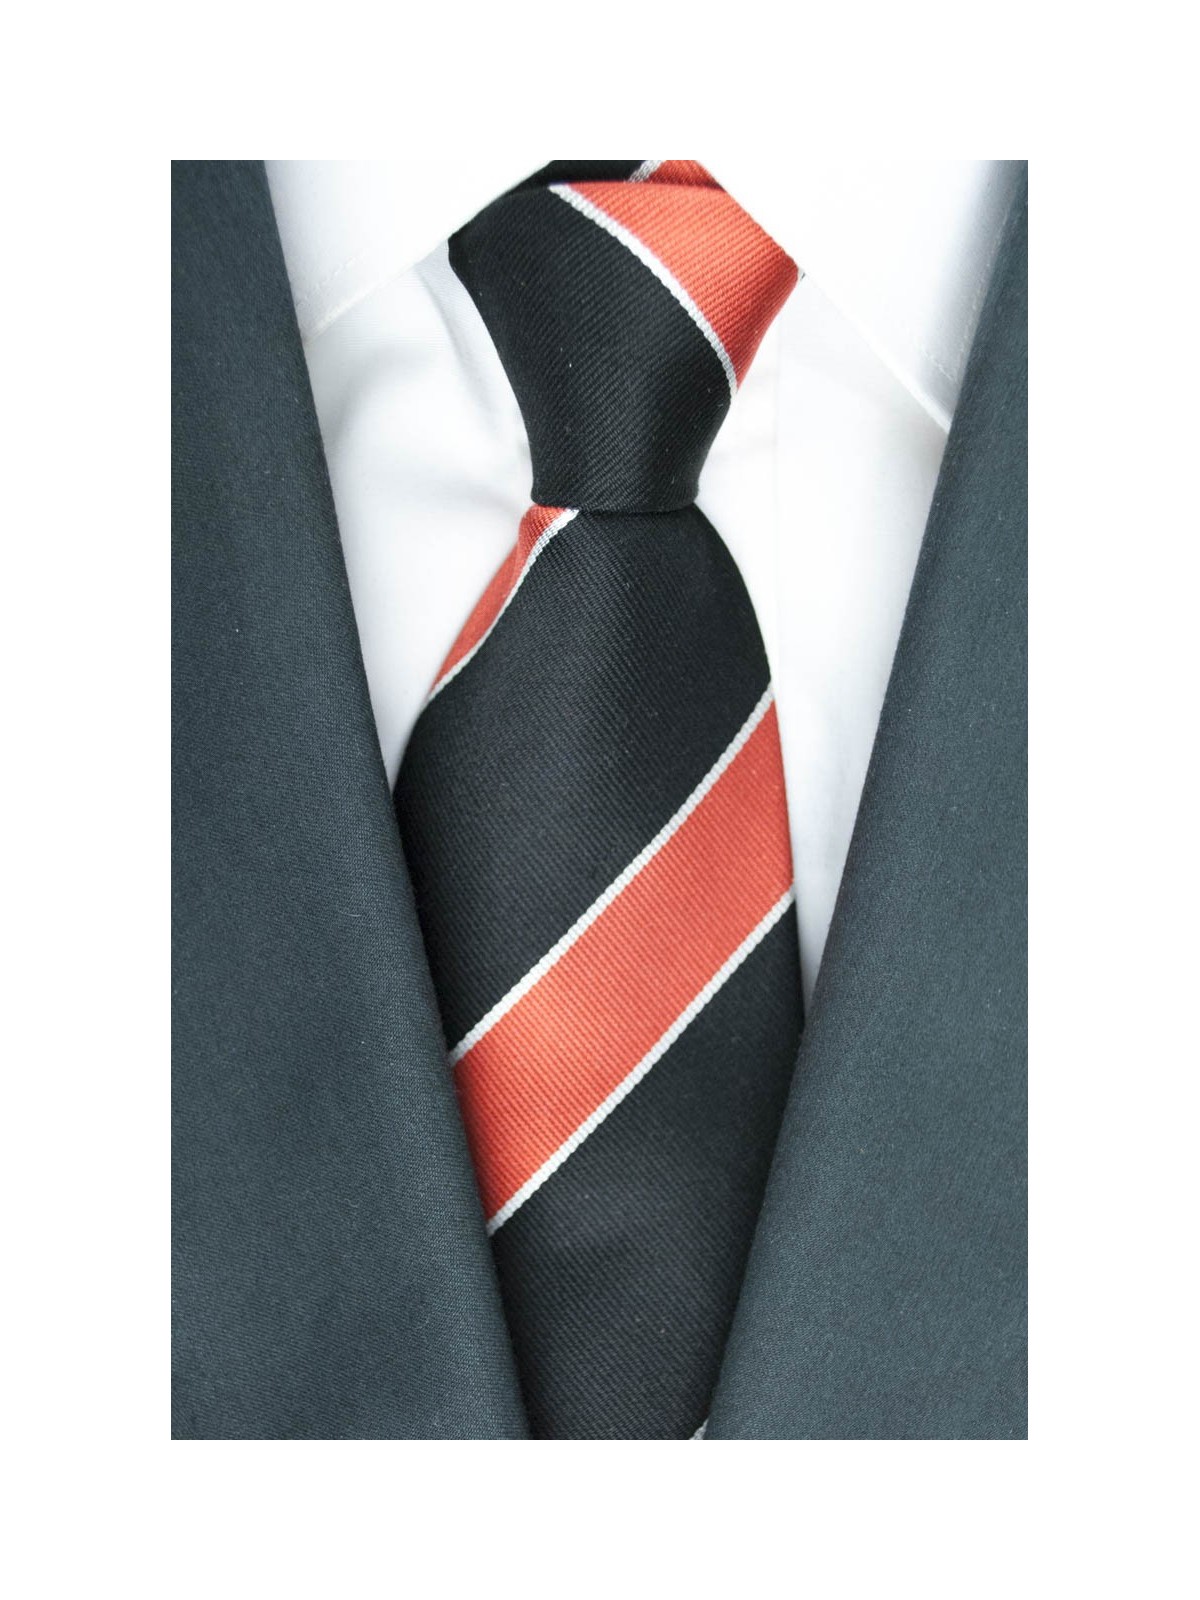 Regimental tie-Orange and Black - 100% Pure Silk